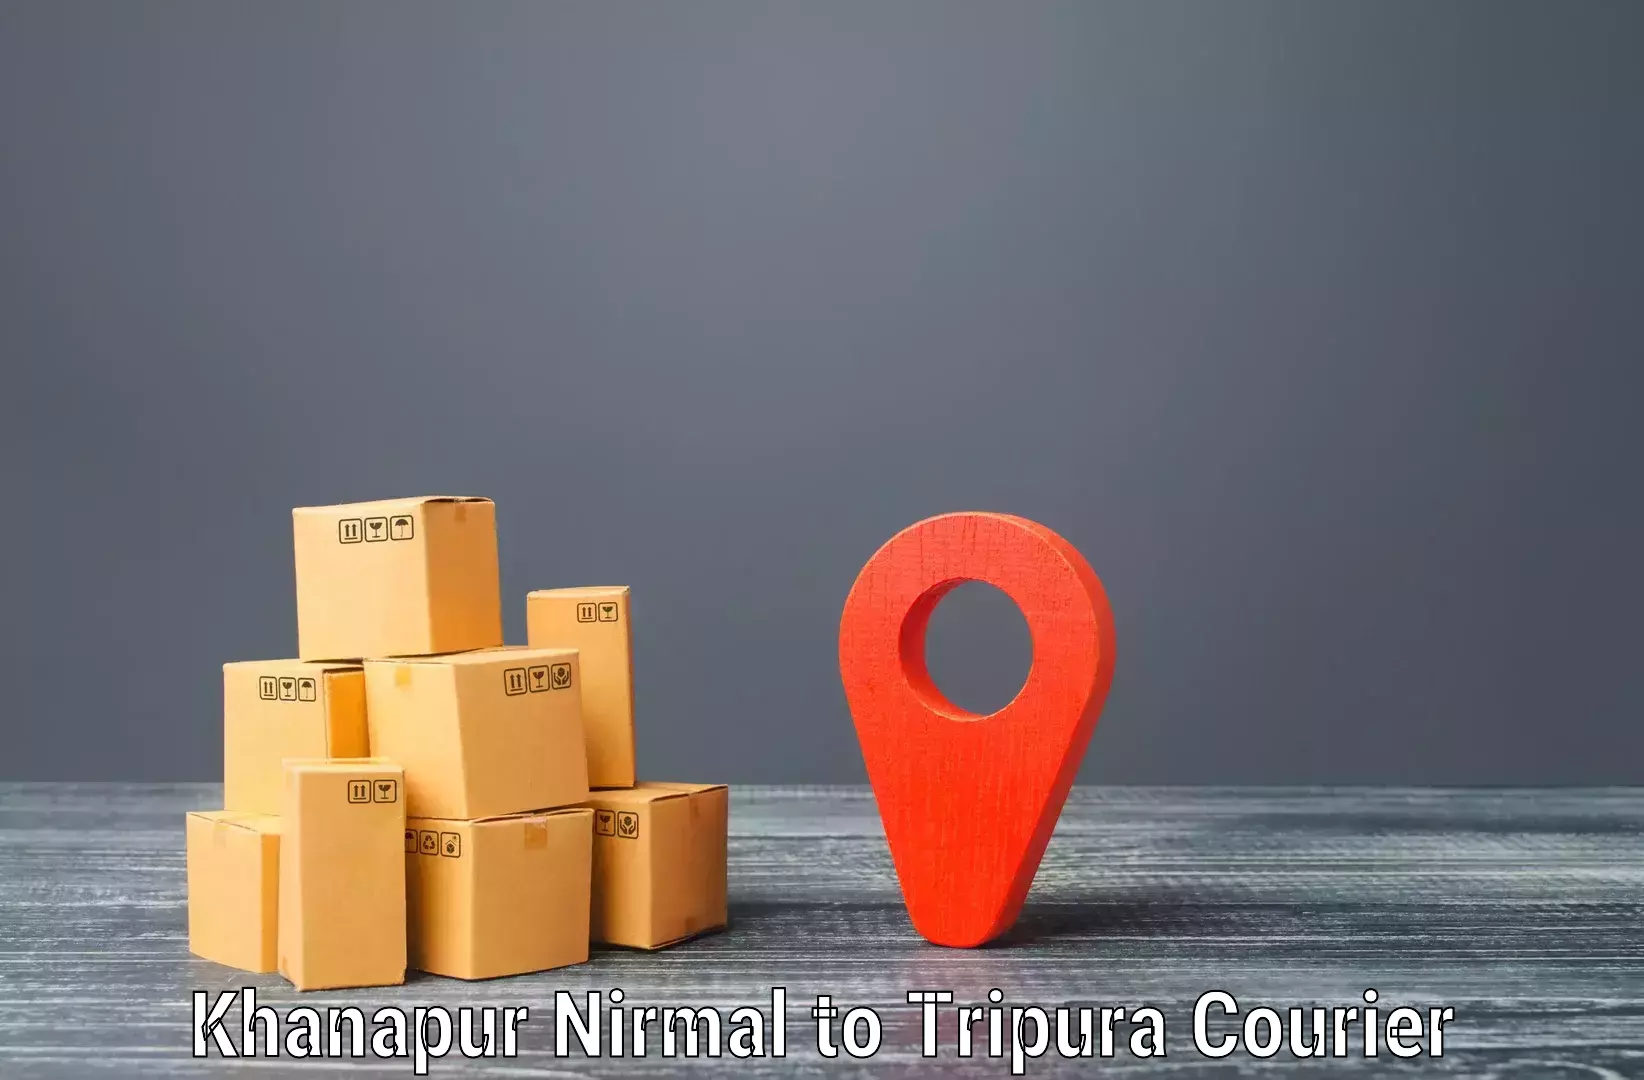 Courier service comparison Khanapur Nirmal to Dharmanagar